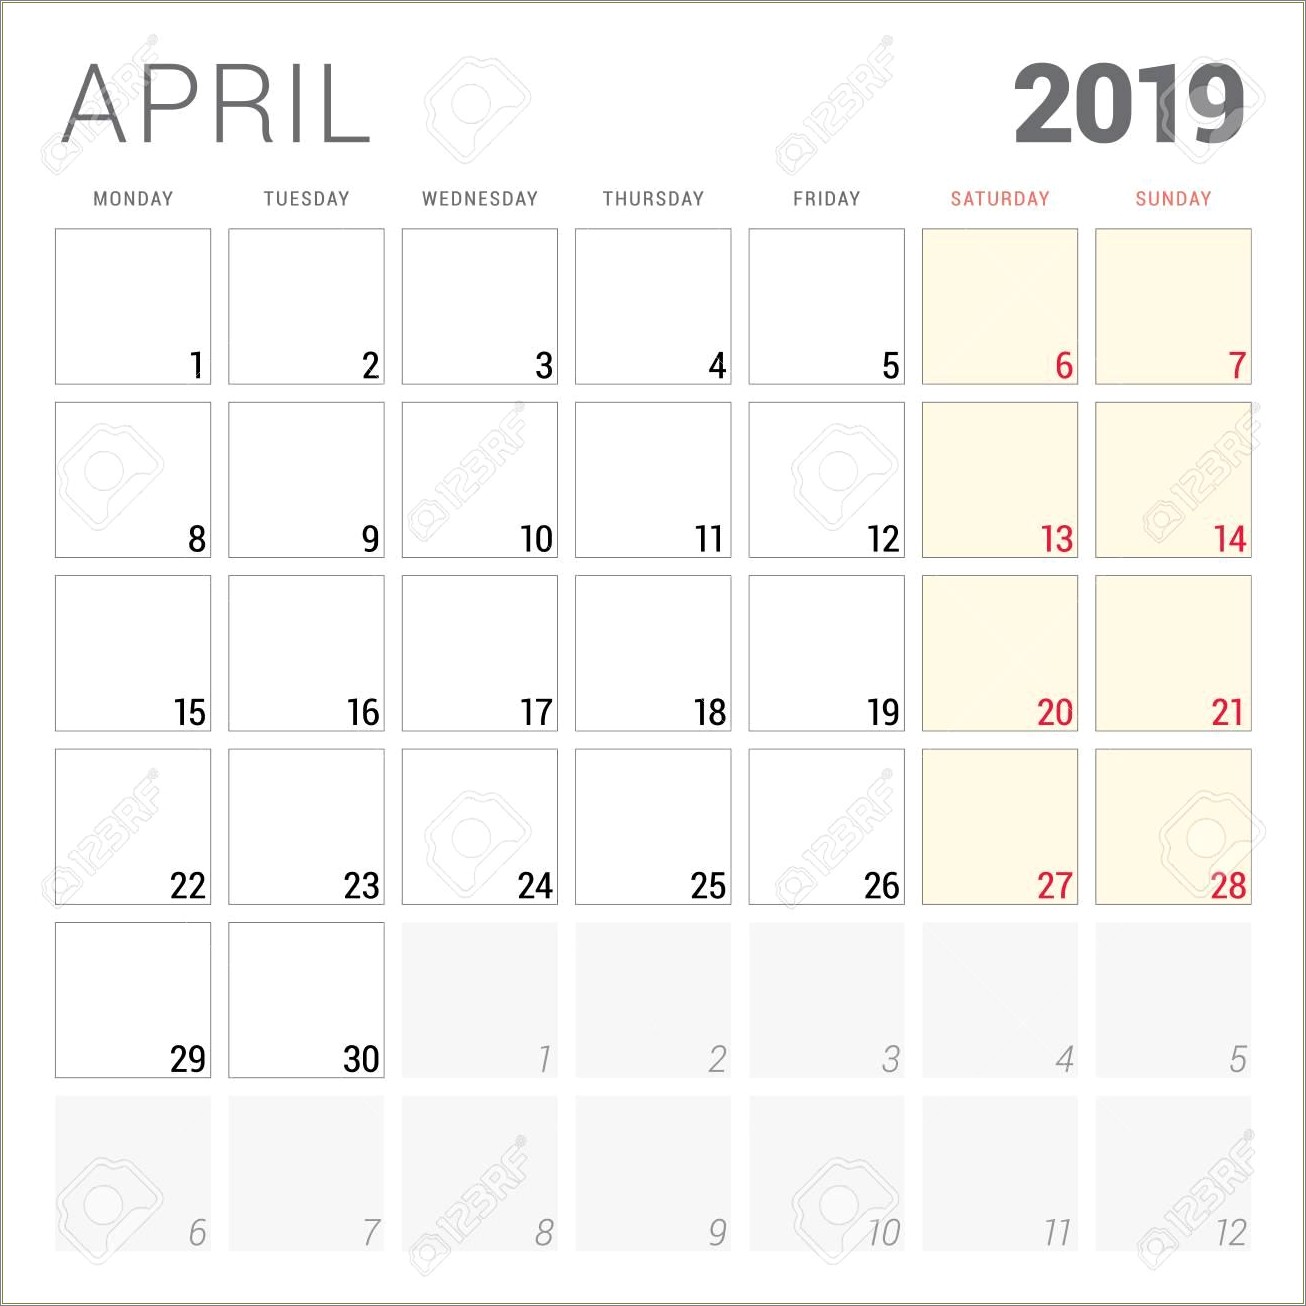 Free Caledar Template April 2019 Weekly